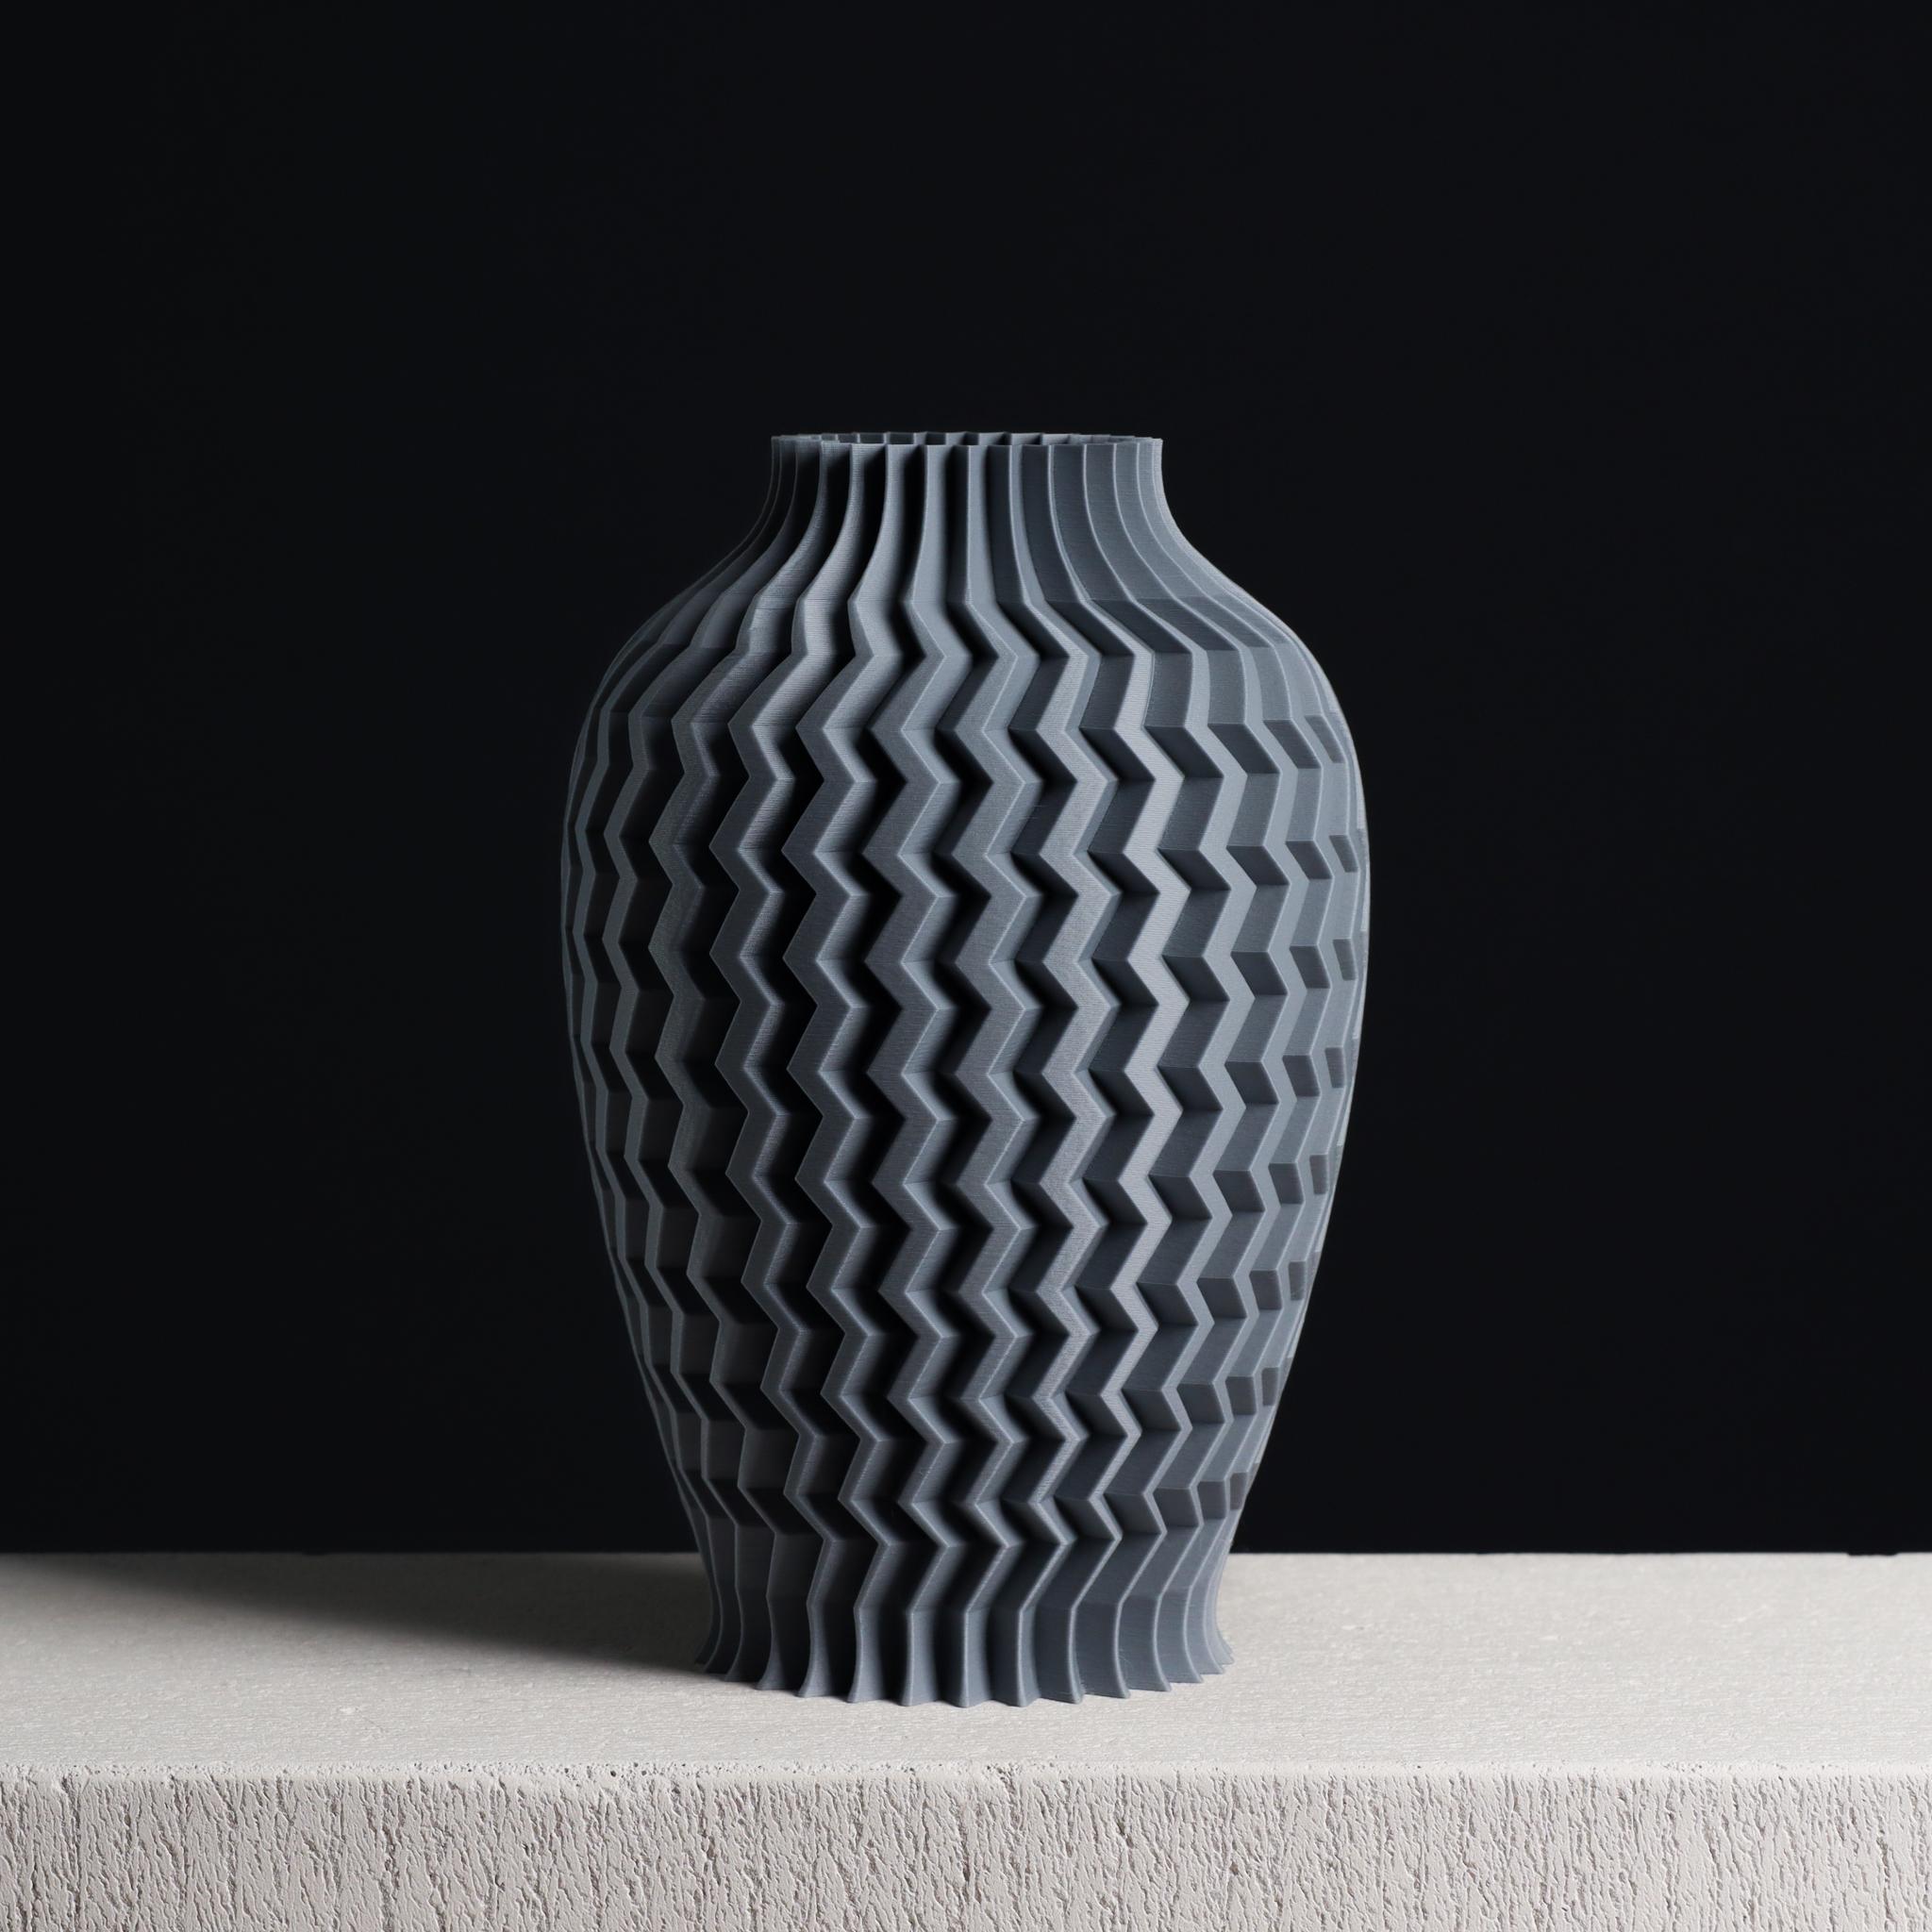  Textured Vase  3d model